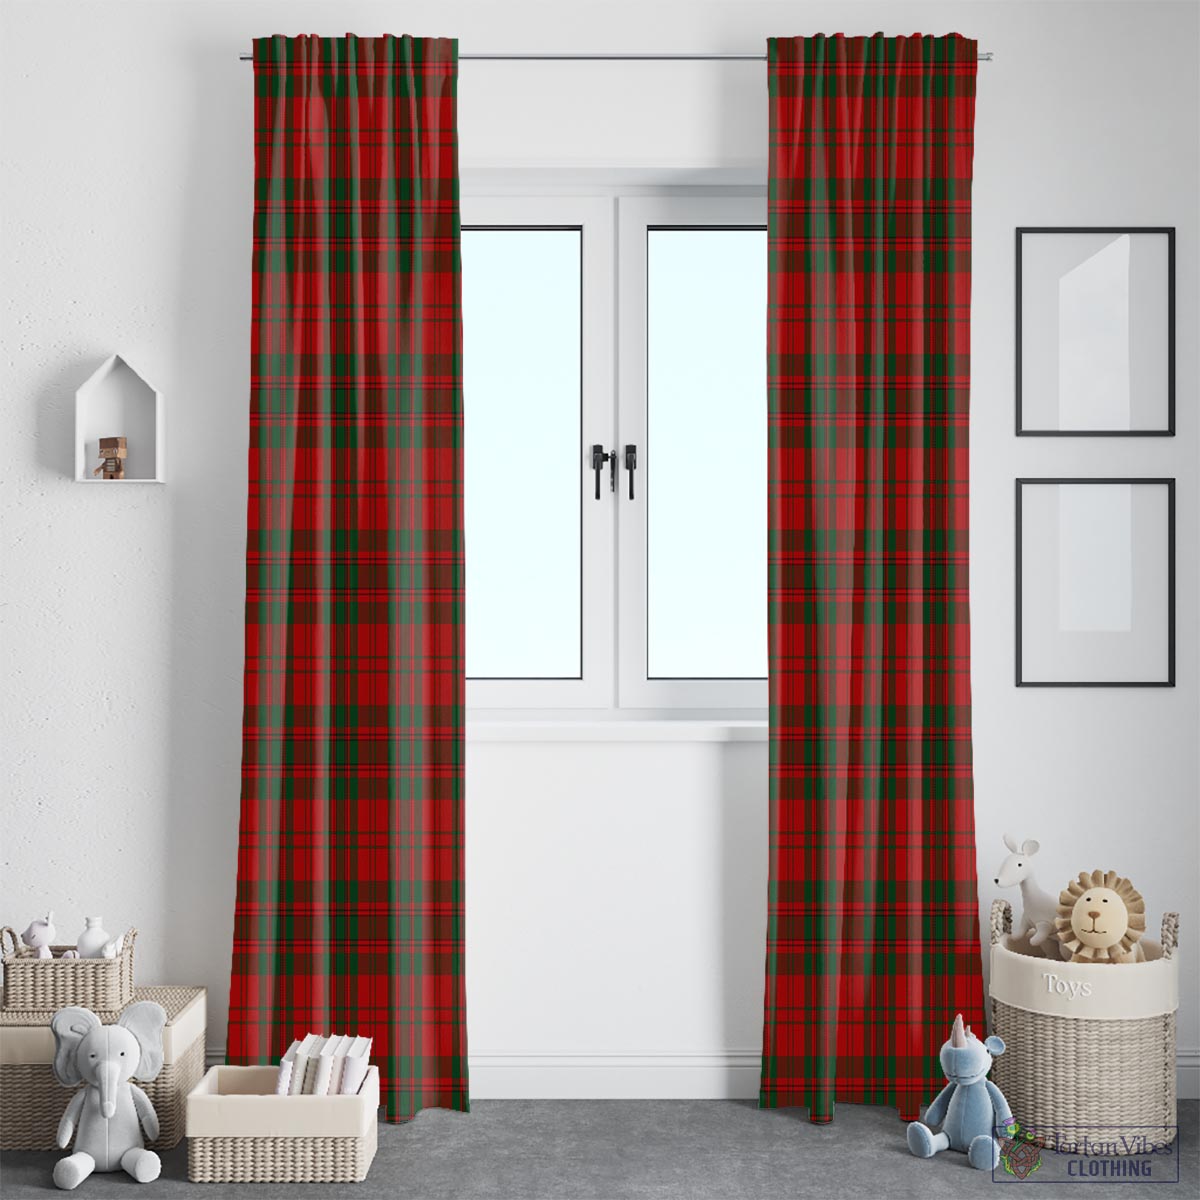 Livingston Tartan Window Curtain